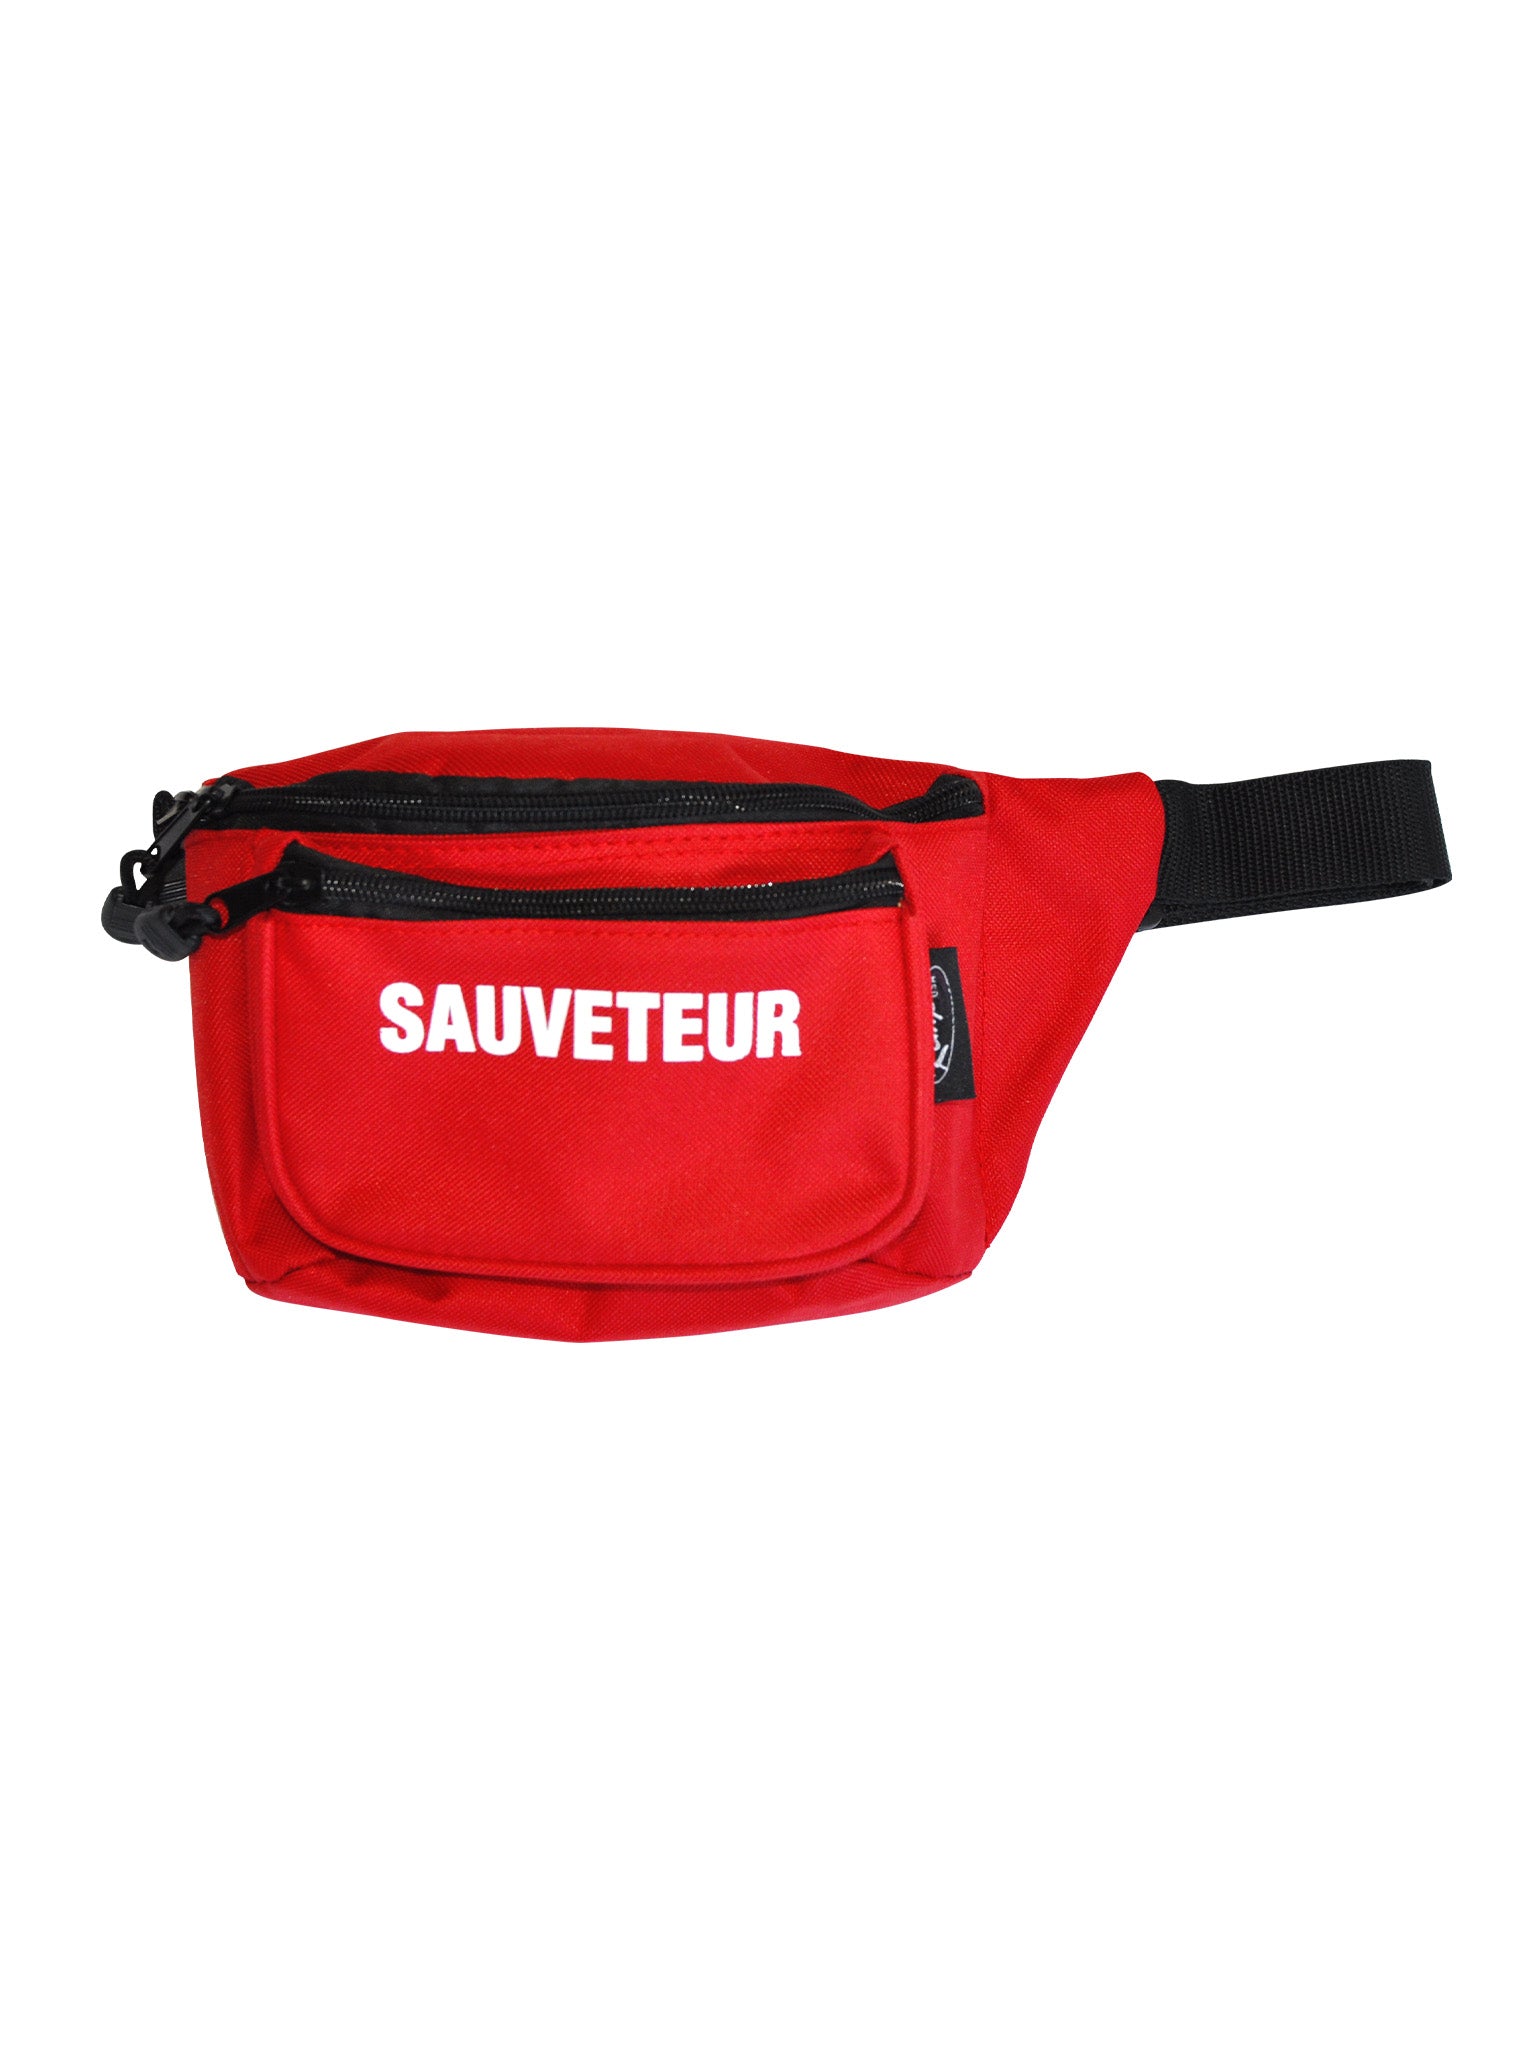 Sauveteur Hip Bag - Red